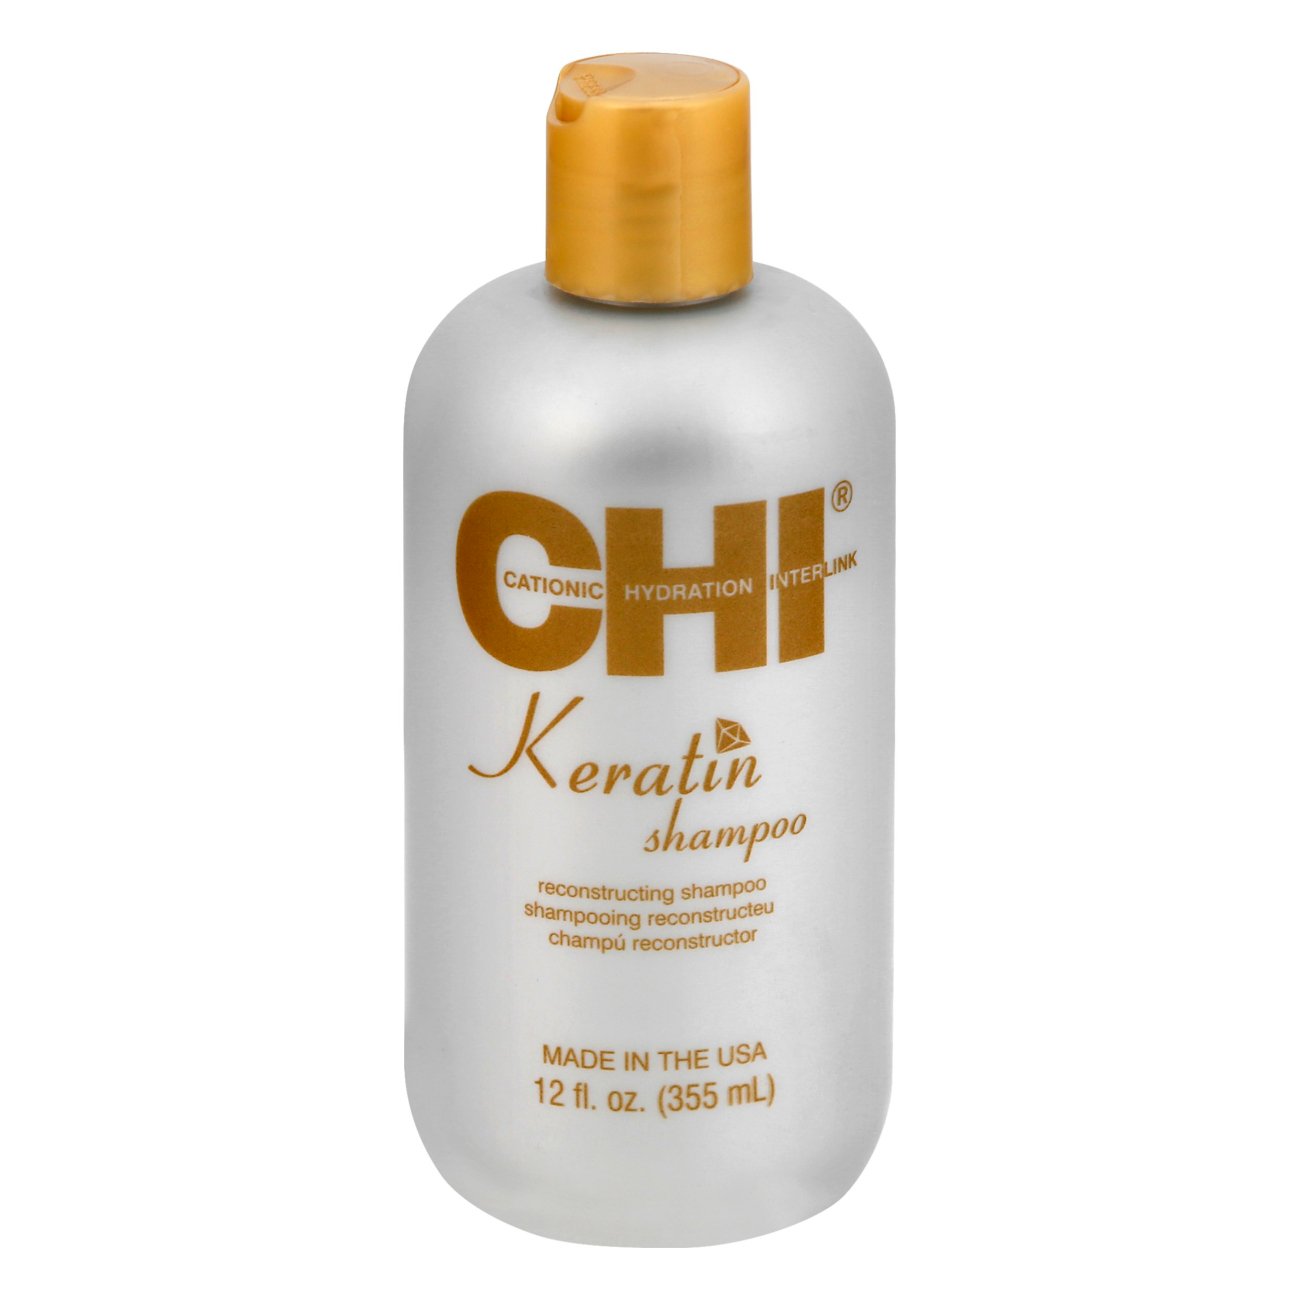 CHI Keratin - Shampoo & Conditioner at H-E-B